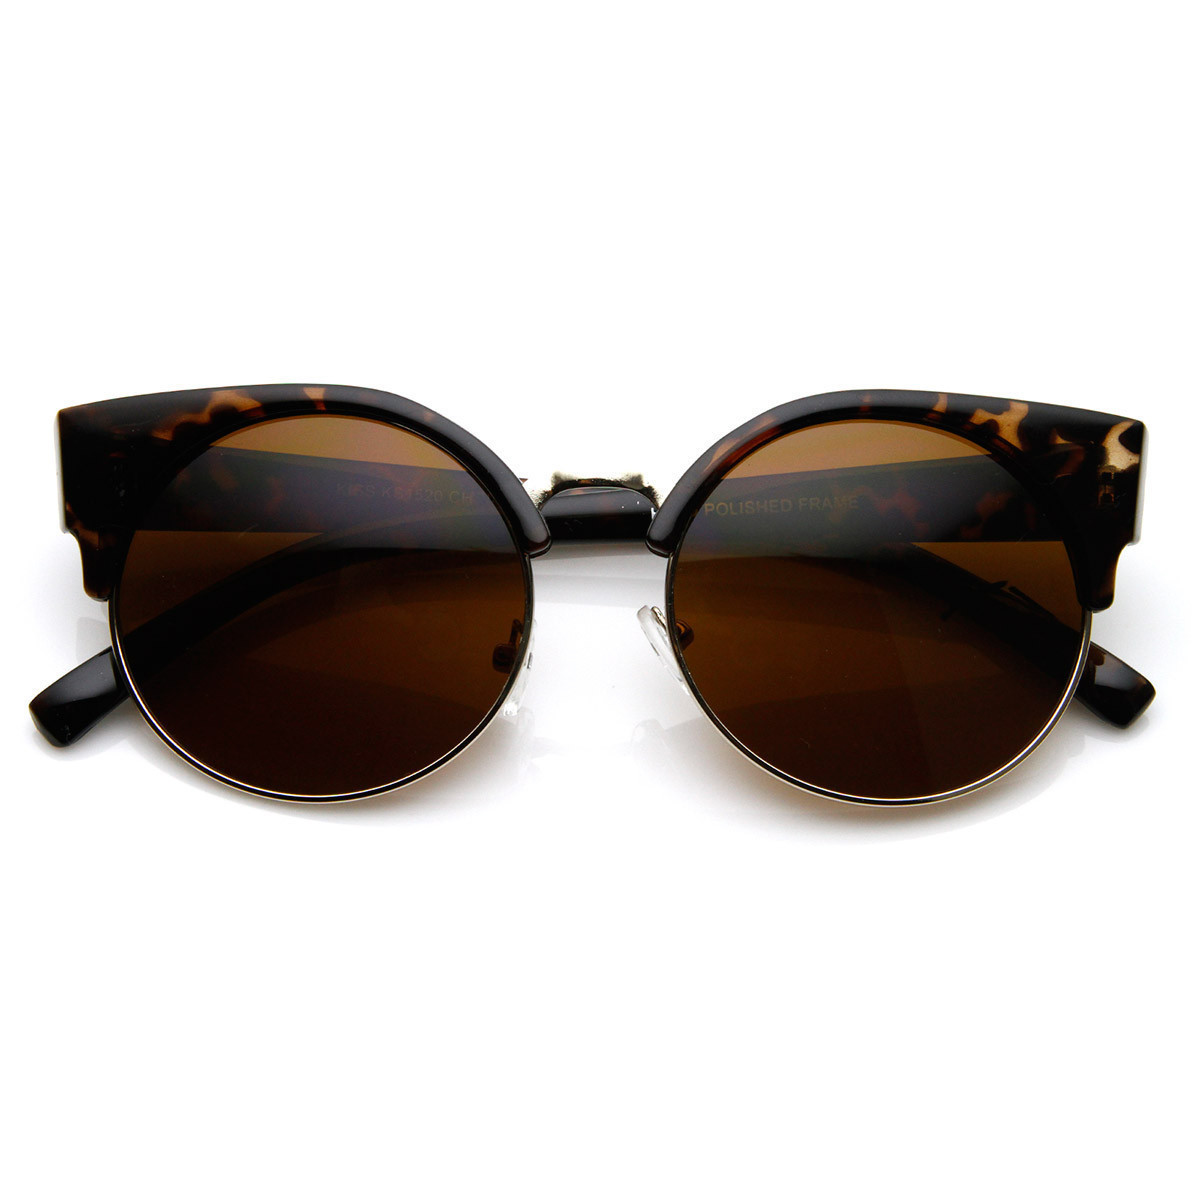 Round Circle Half Frame Semi-Rimless Cateye Sunglasses - 8785 - Black-Gold